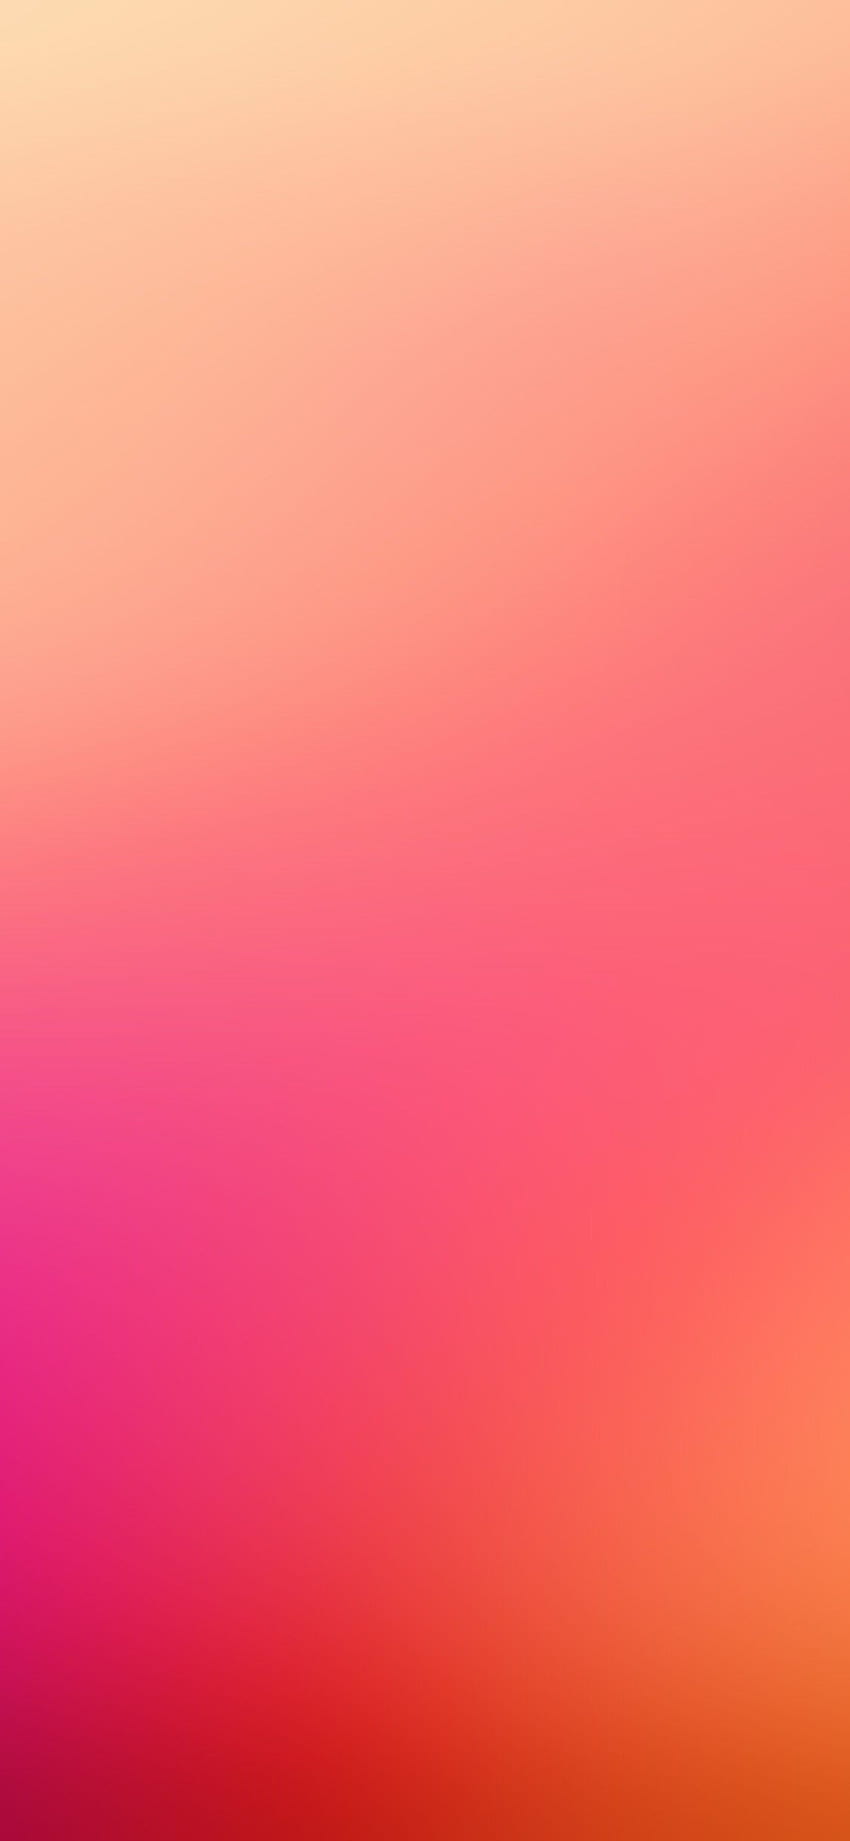 iPhoneX : red orange love fire blur gradation, Orange Ombre HD phone wallpaper